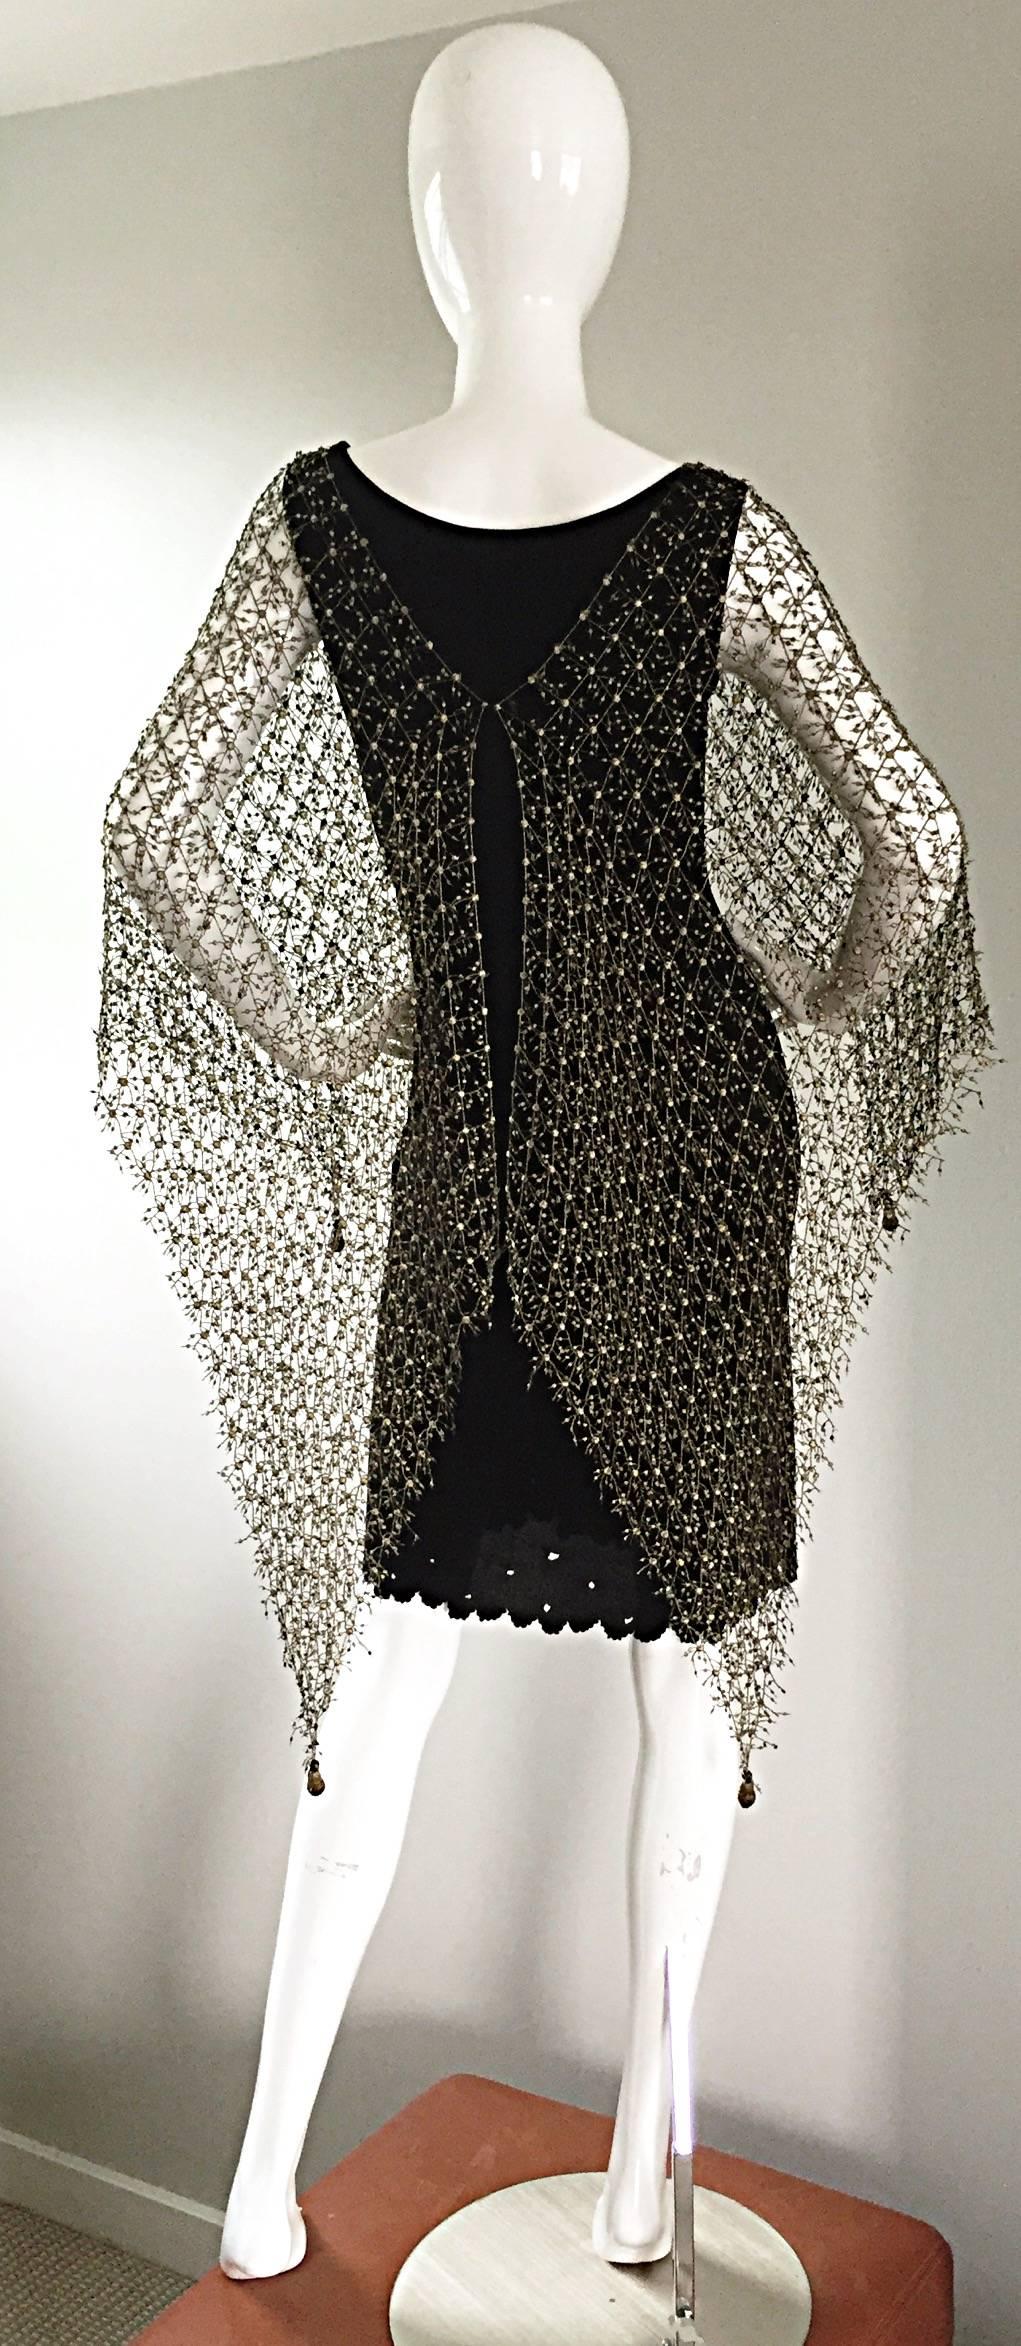 Holly's Harp Vintage Black Silk Jersey Dress and Gold Crochet Cape 2